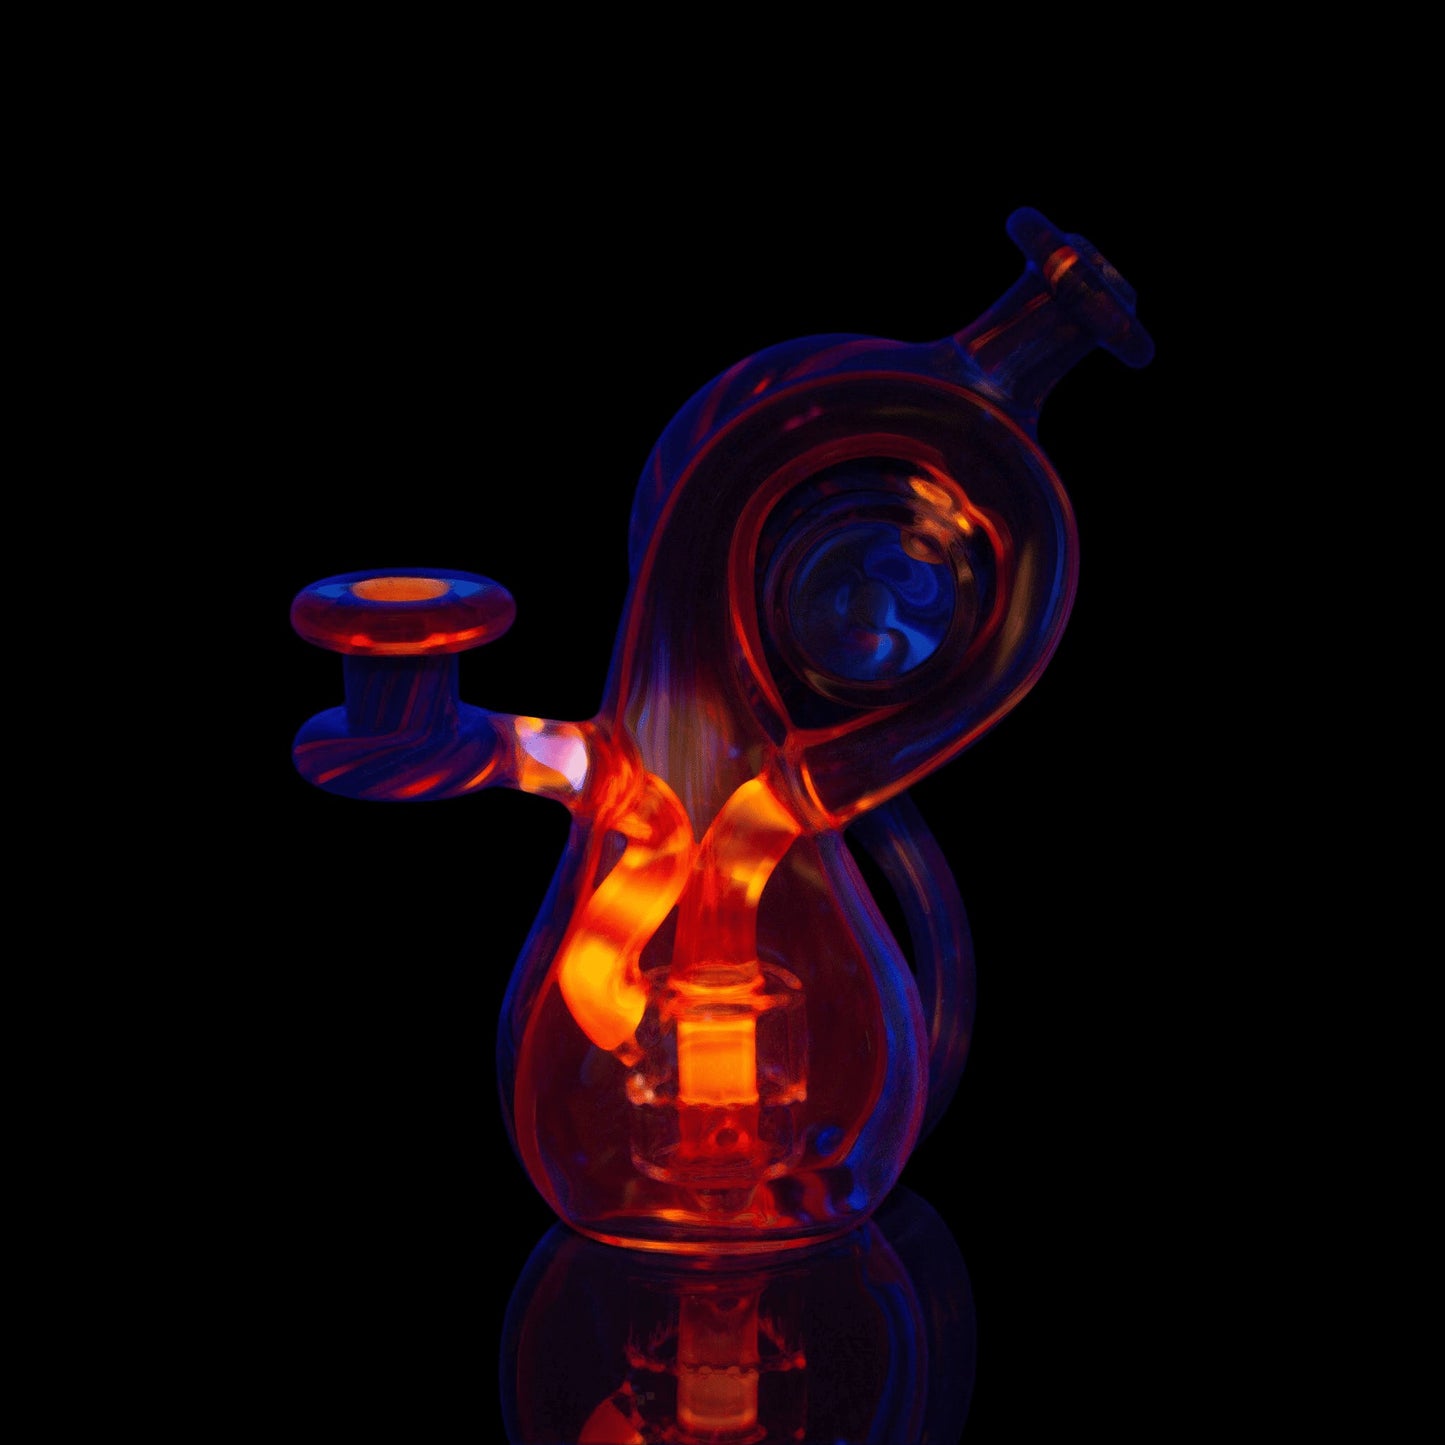 sophisticated art piece - Infinity Bottle by Earl Jr  x Trip A (Sweater Weather)